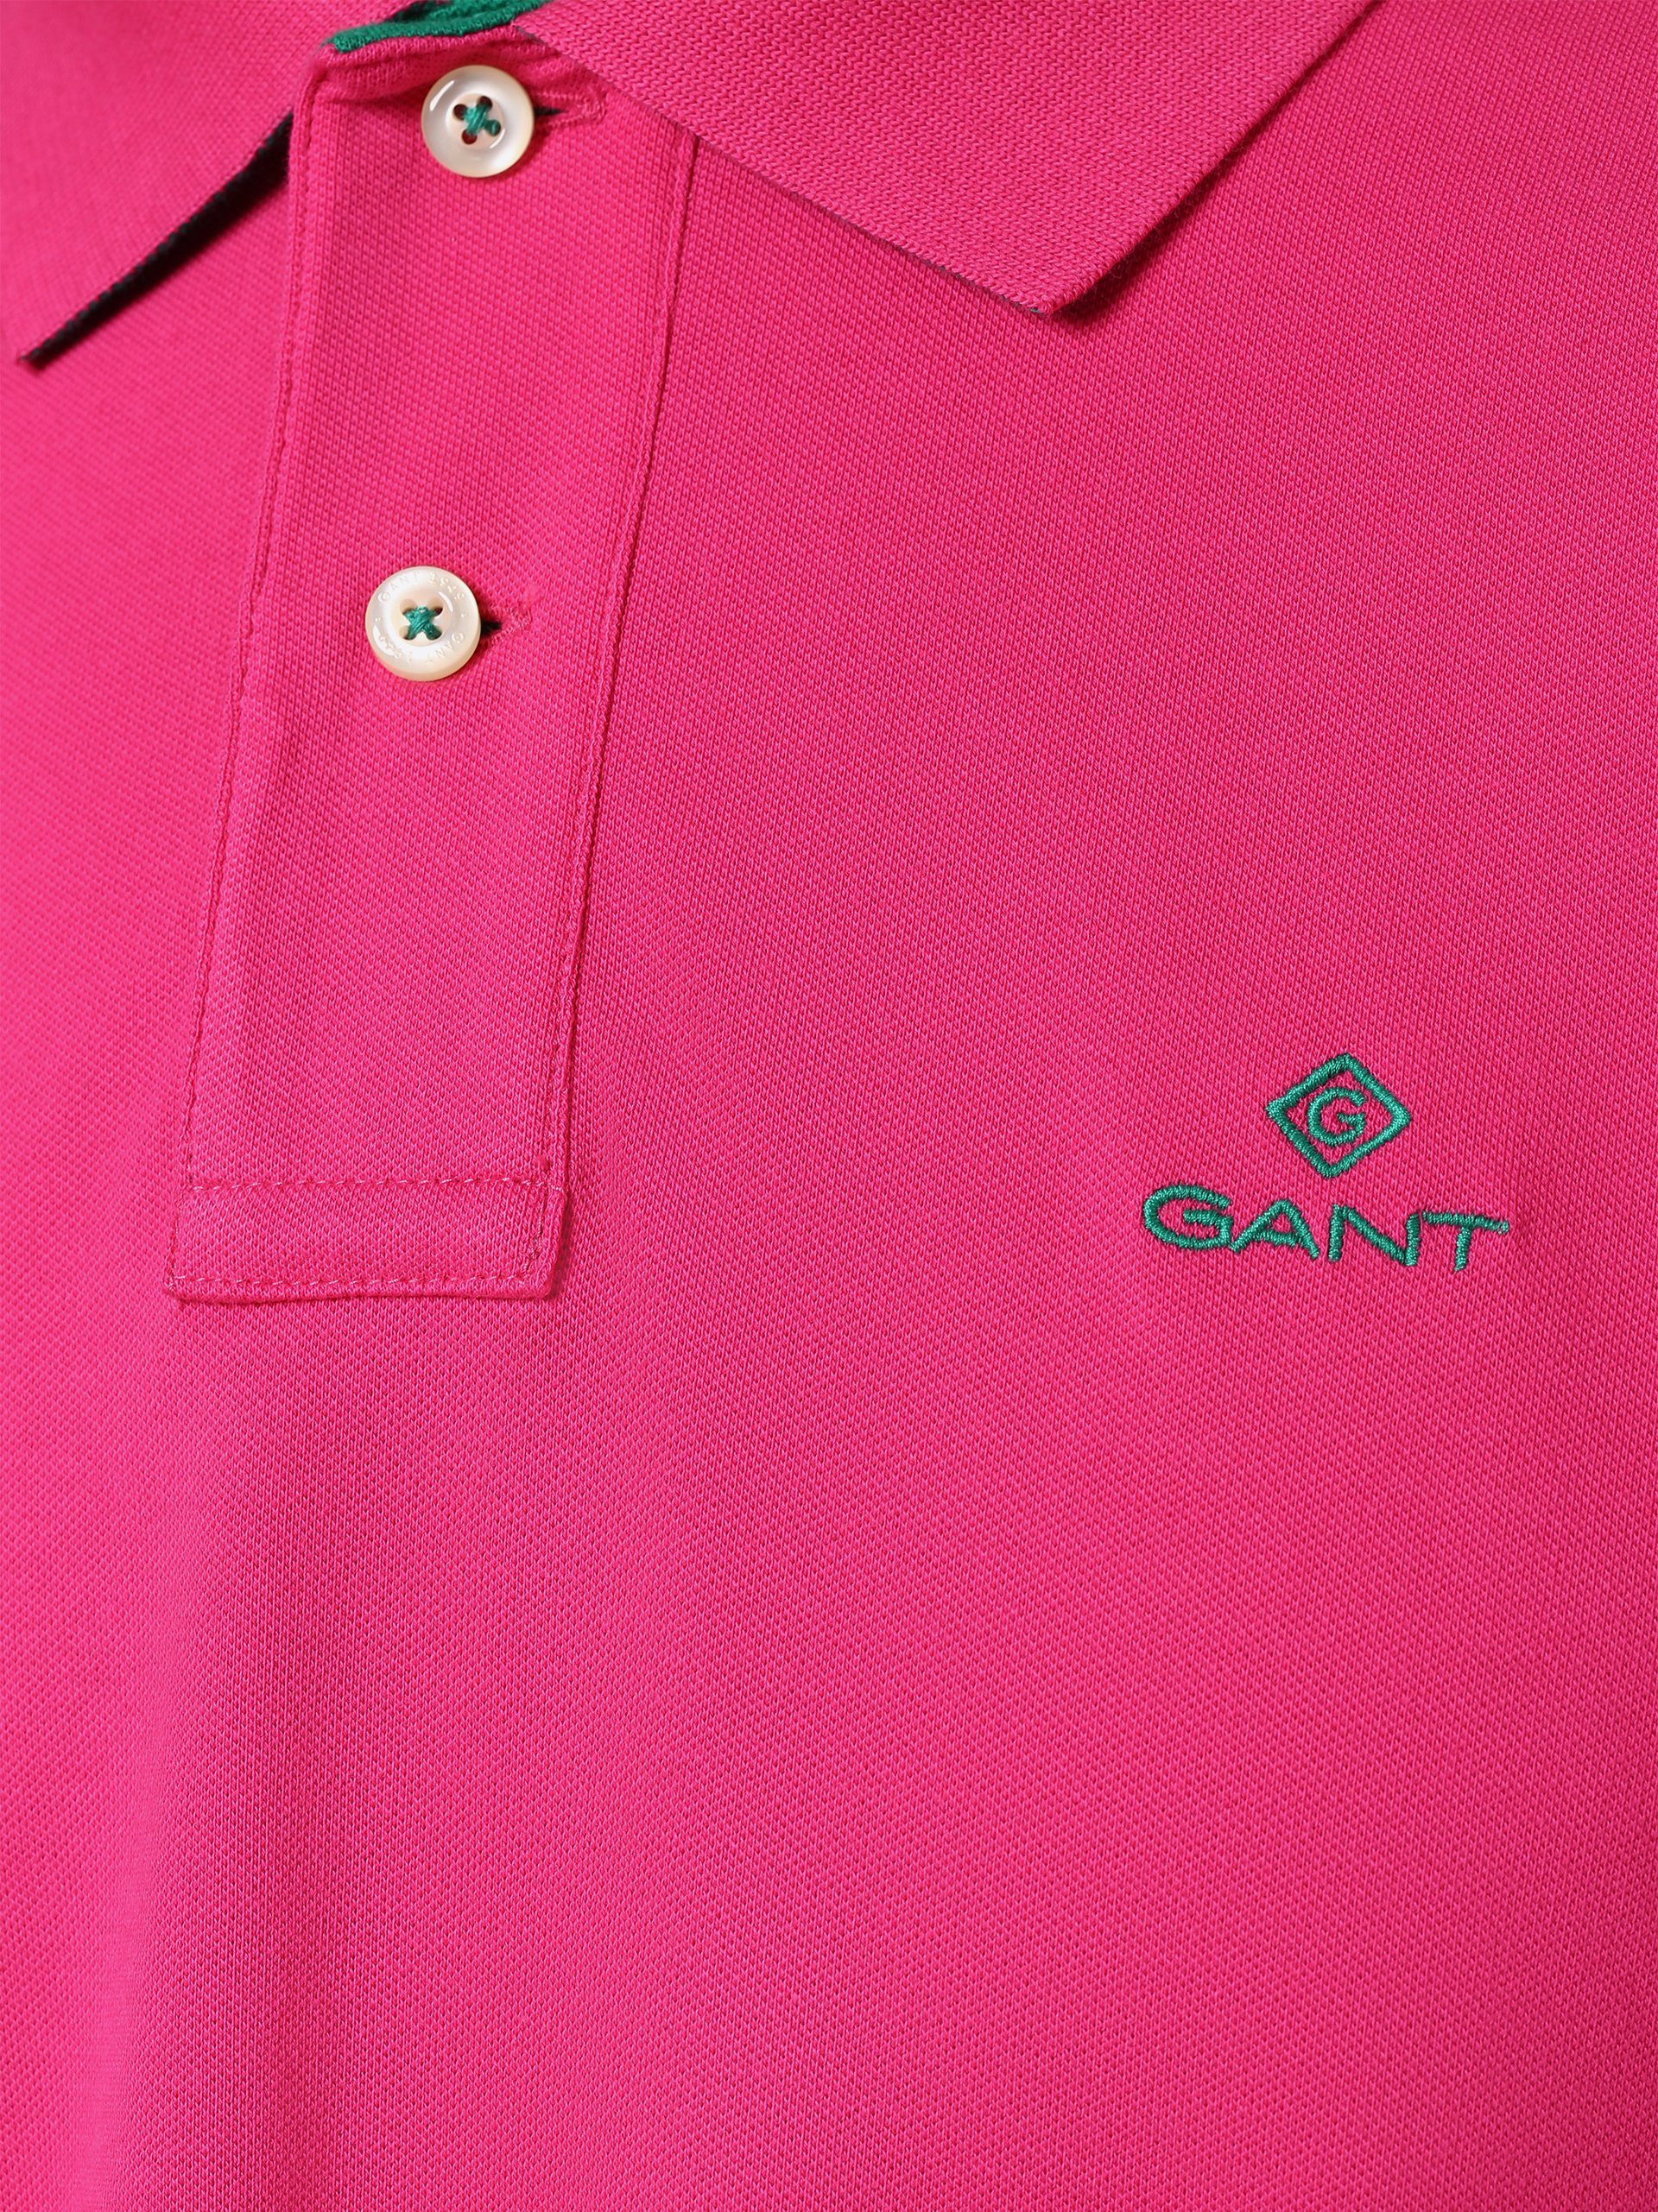 Gant Poloshirt pink